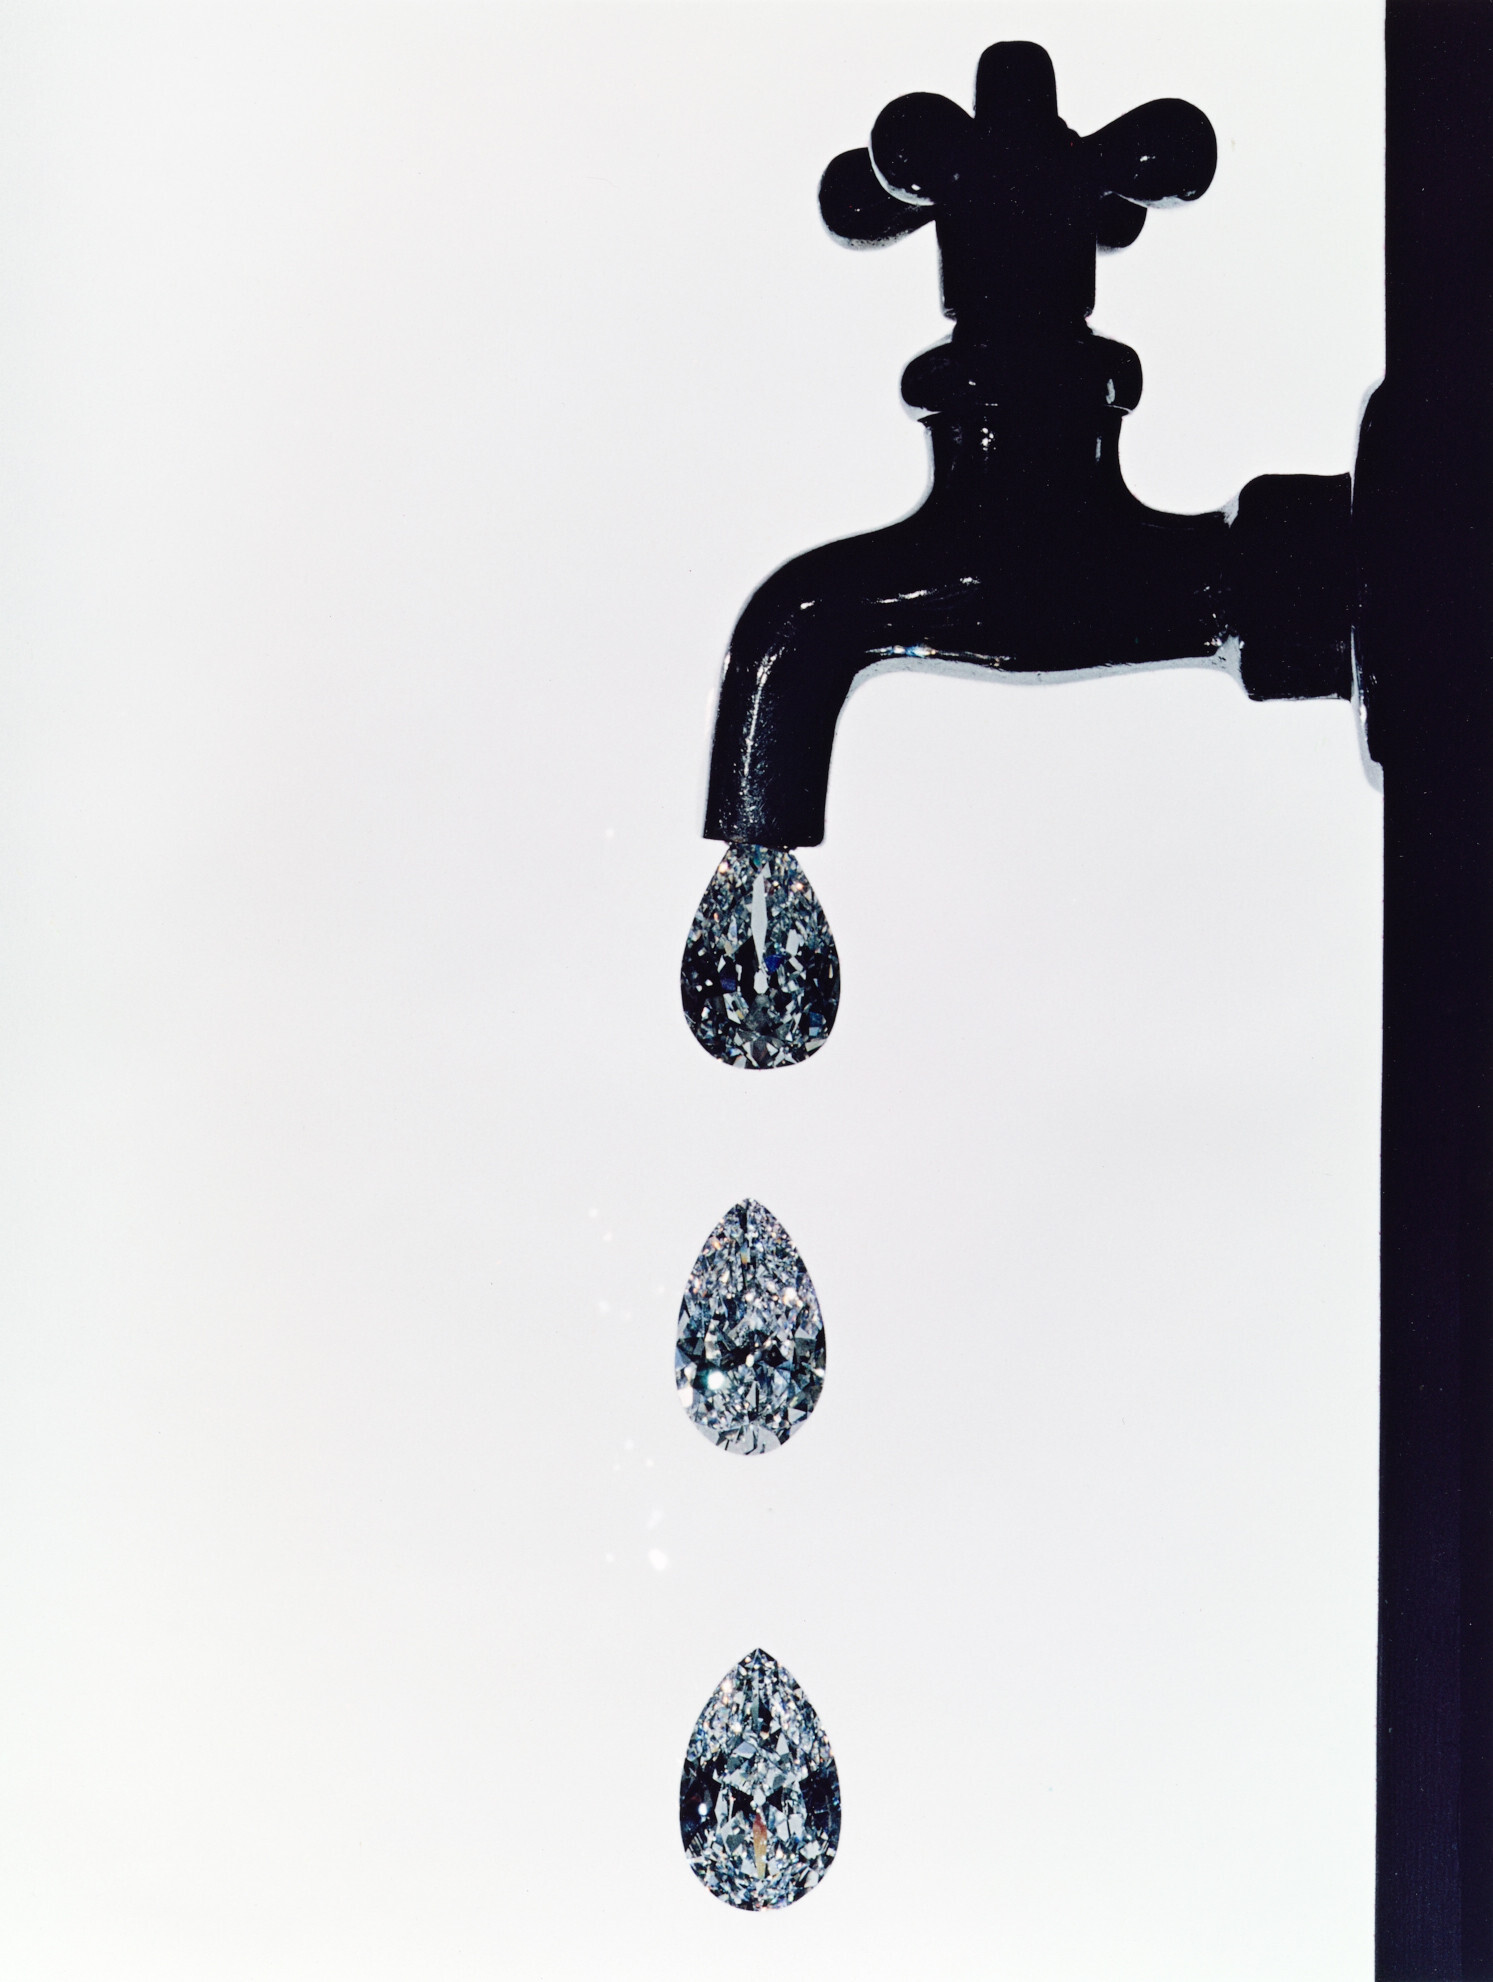 Faucet Dripping Diamonds, Нью-Йорк, 1963 г. Фотограф Ирвин Пенн